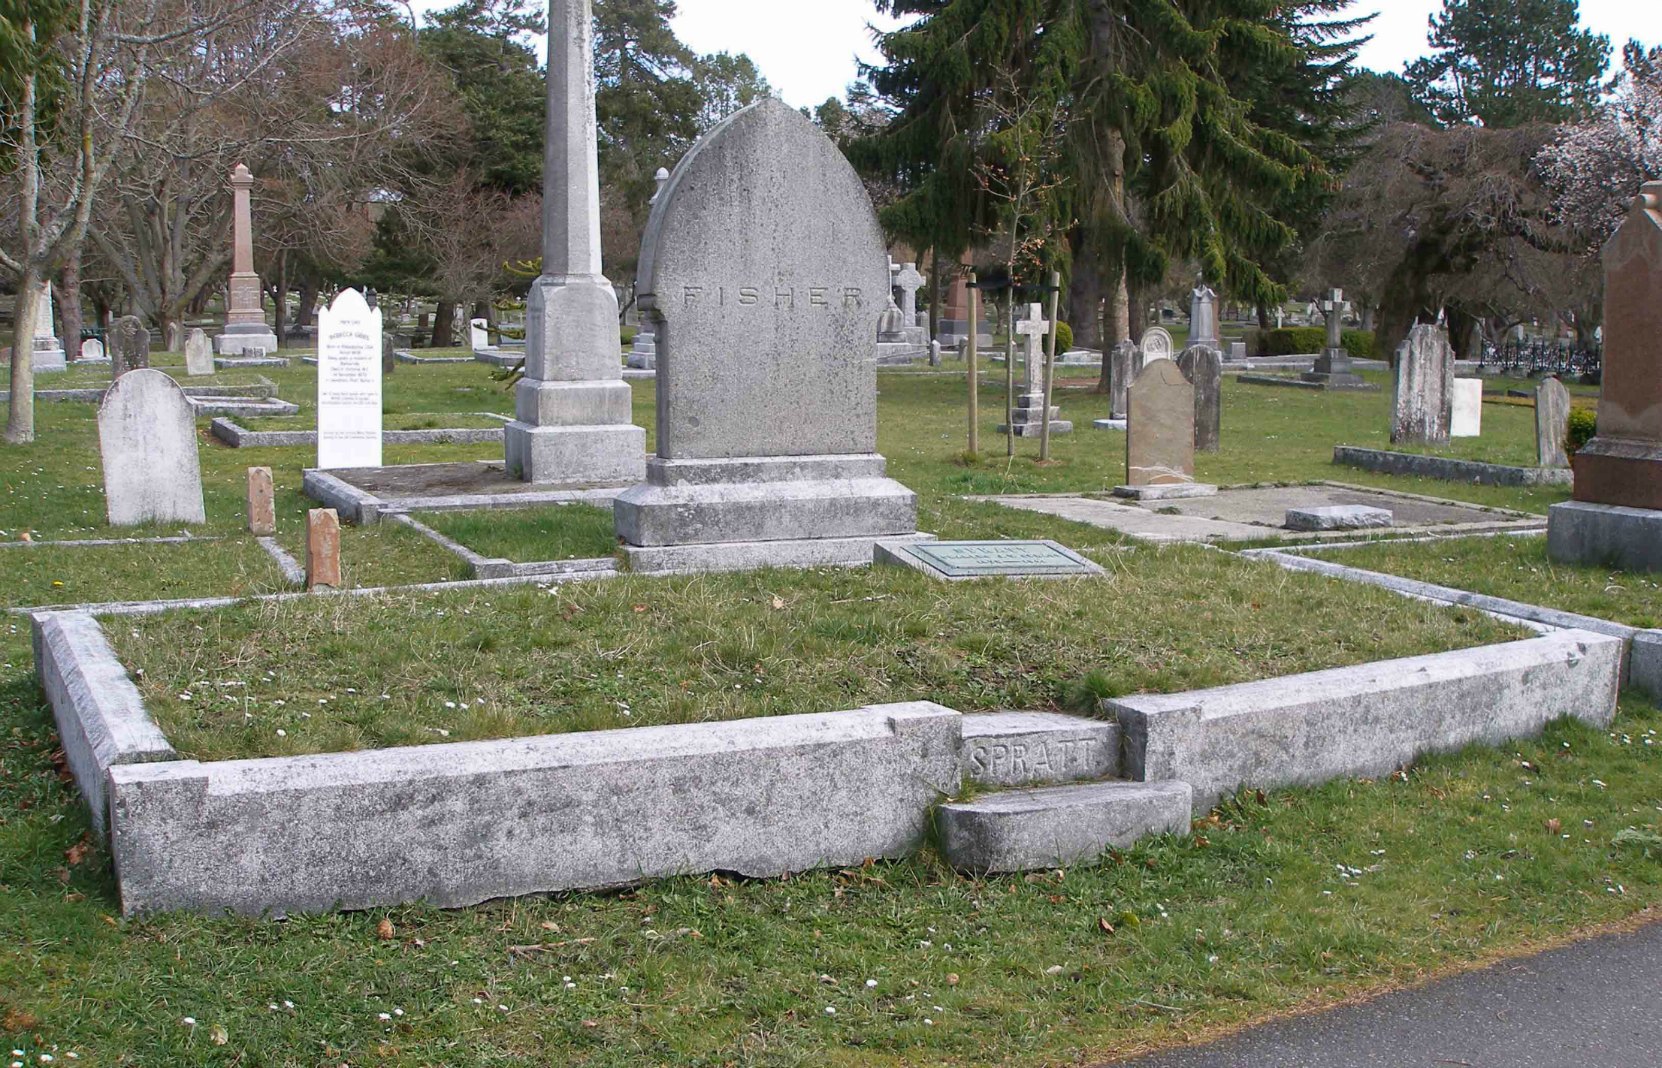 Joseph Spratt grave, Ross Bay Cemetery, Victoria, B.C.